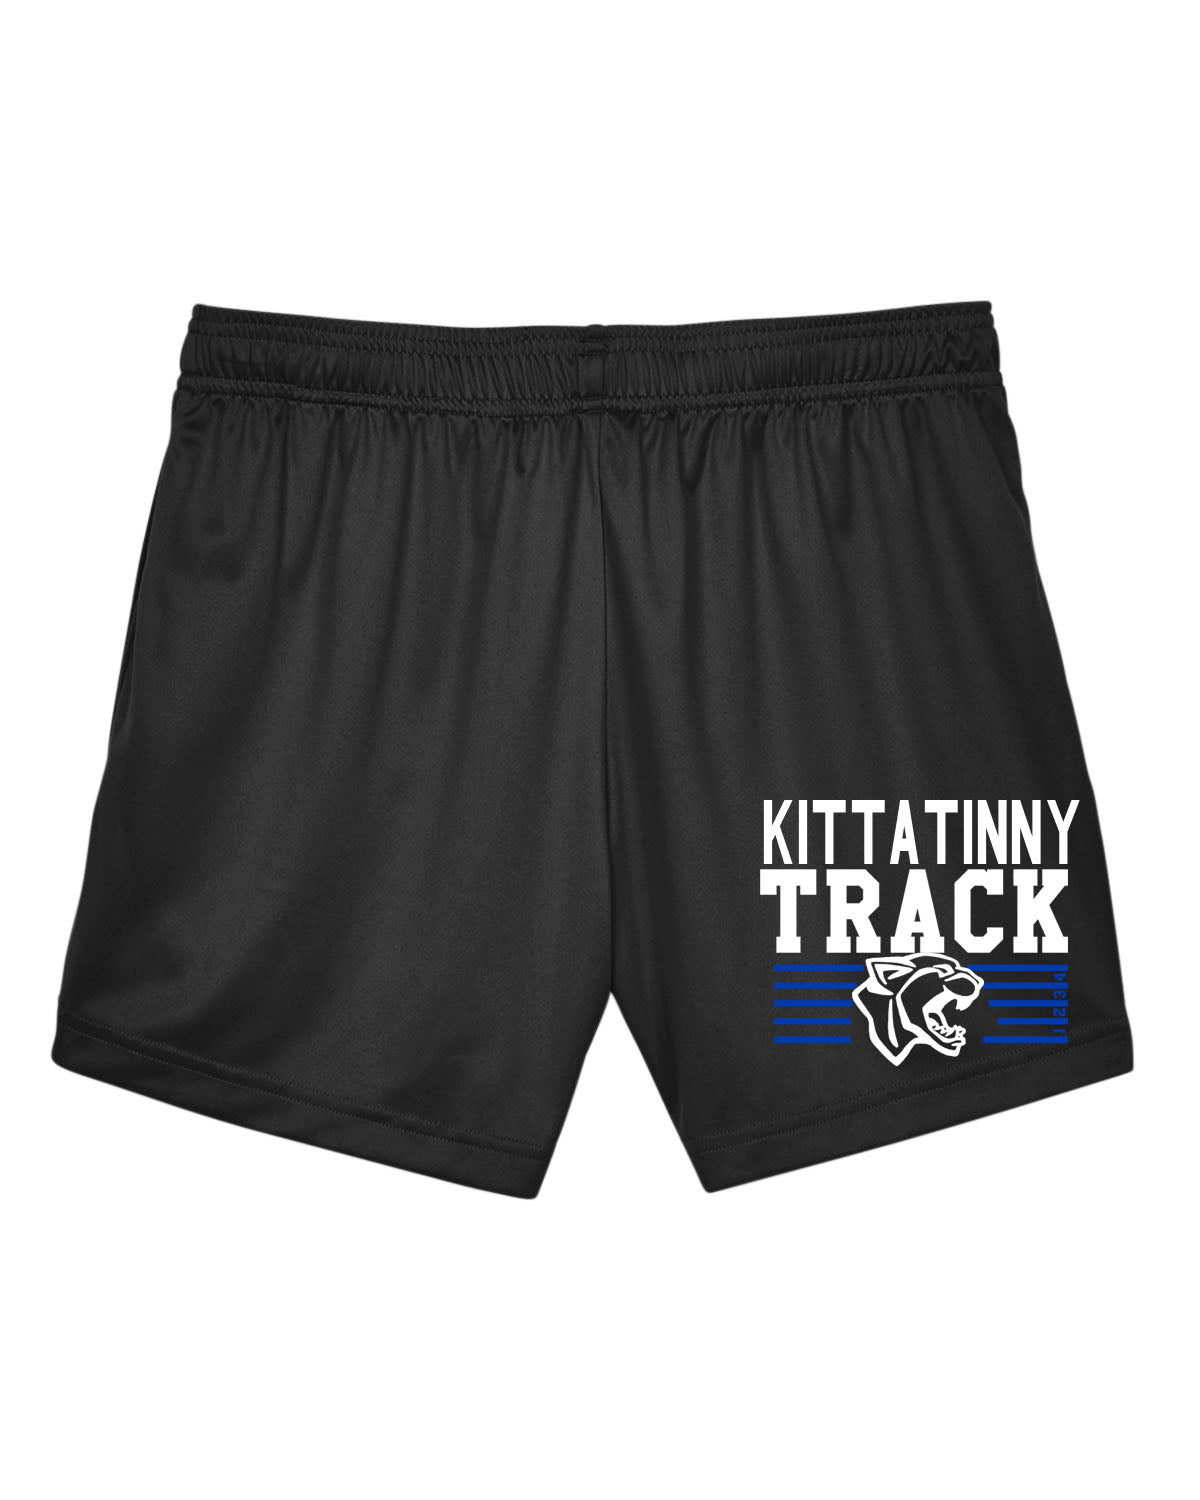 Kittatinny Track Ladies Performance Design 5 Shorts